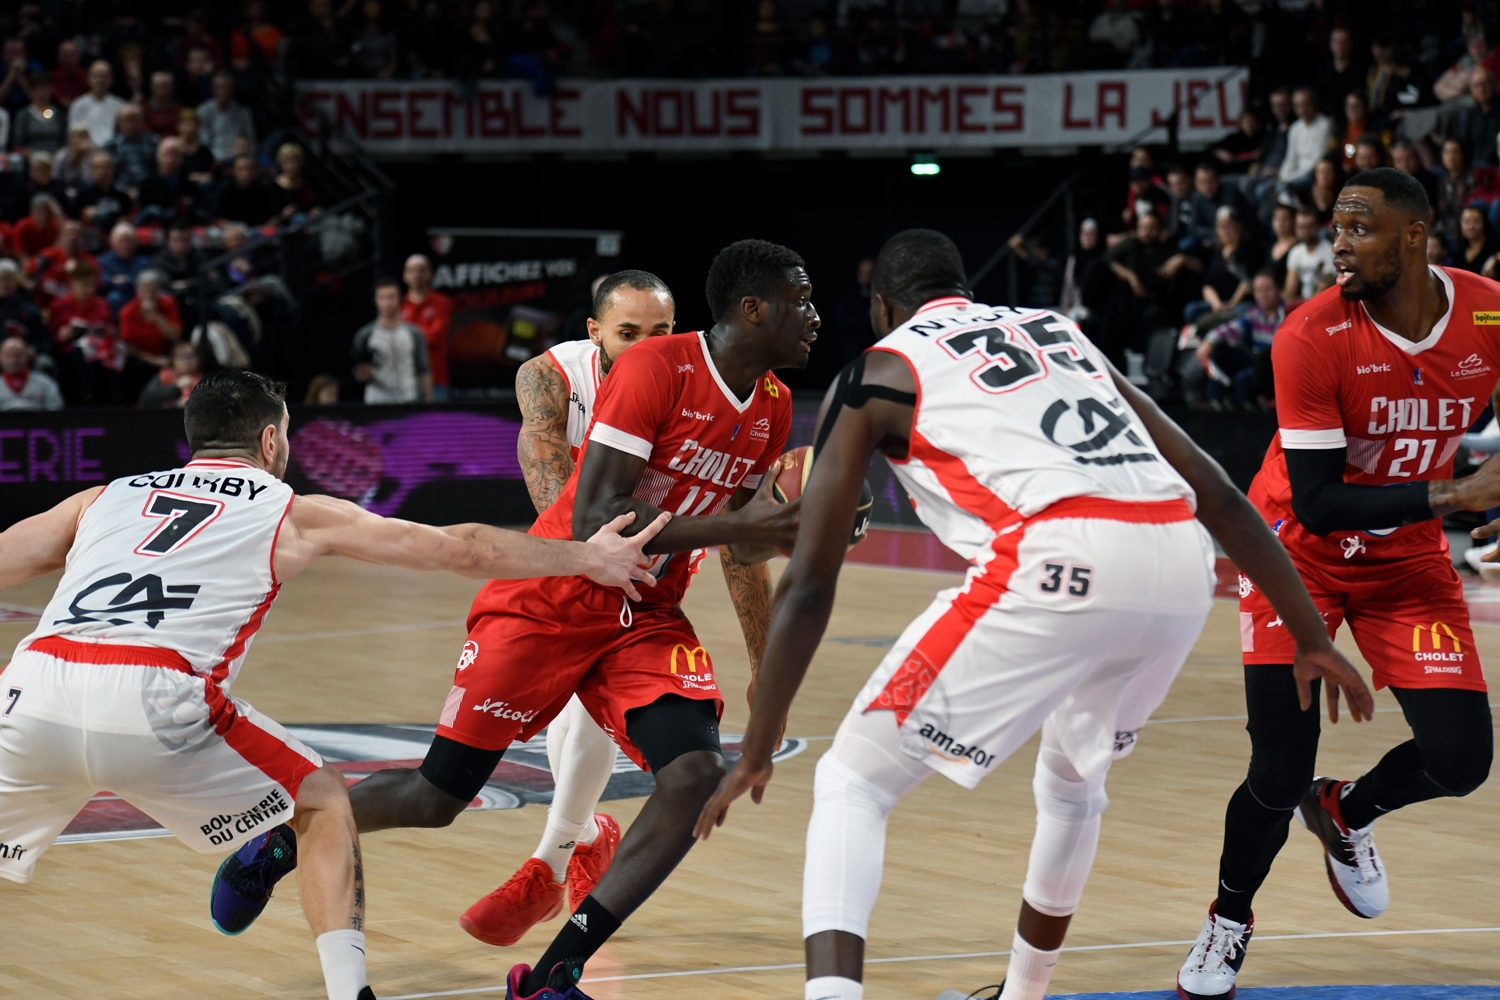 JL Bourg - Cholet Basket (08-12-18)